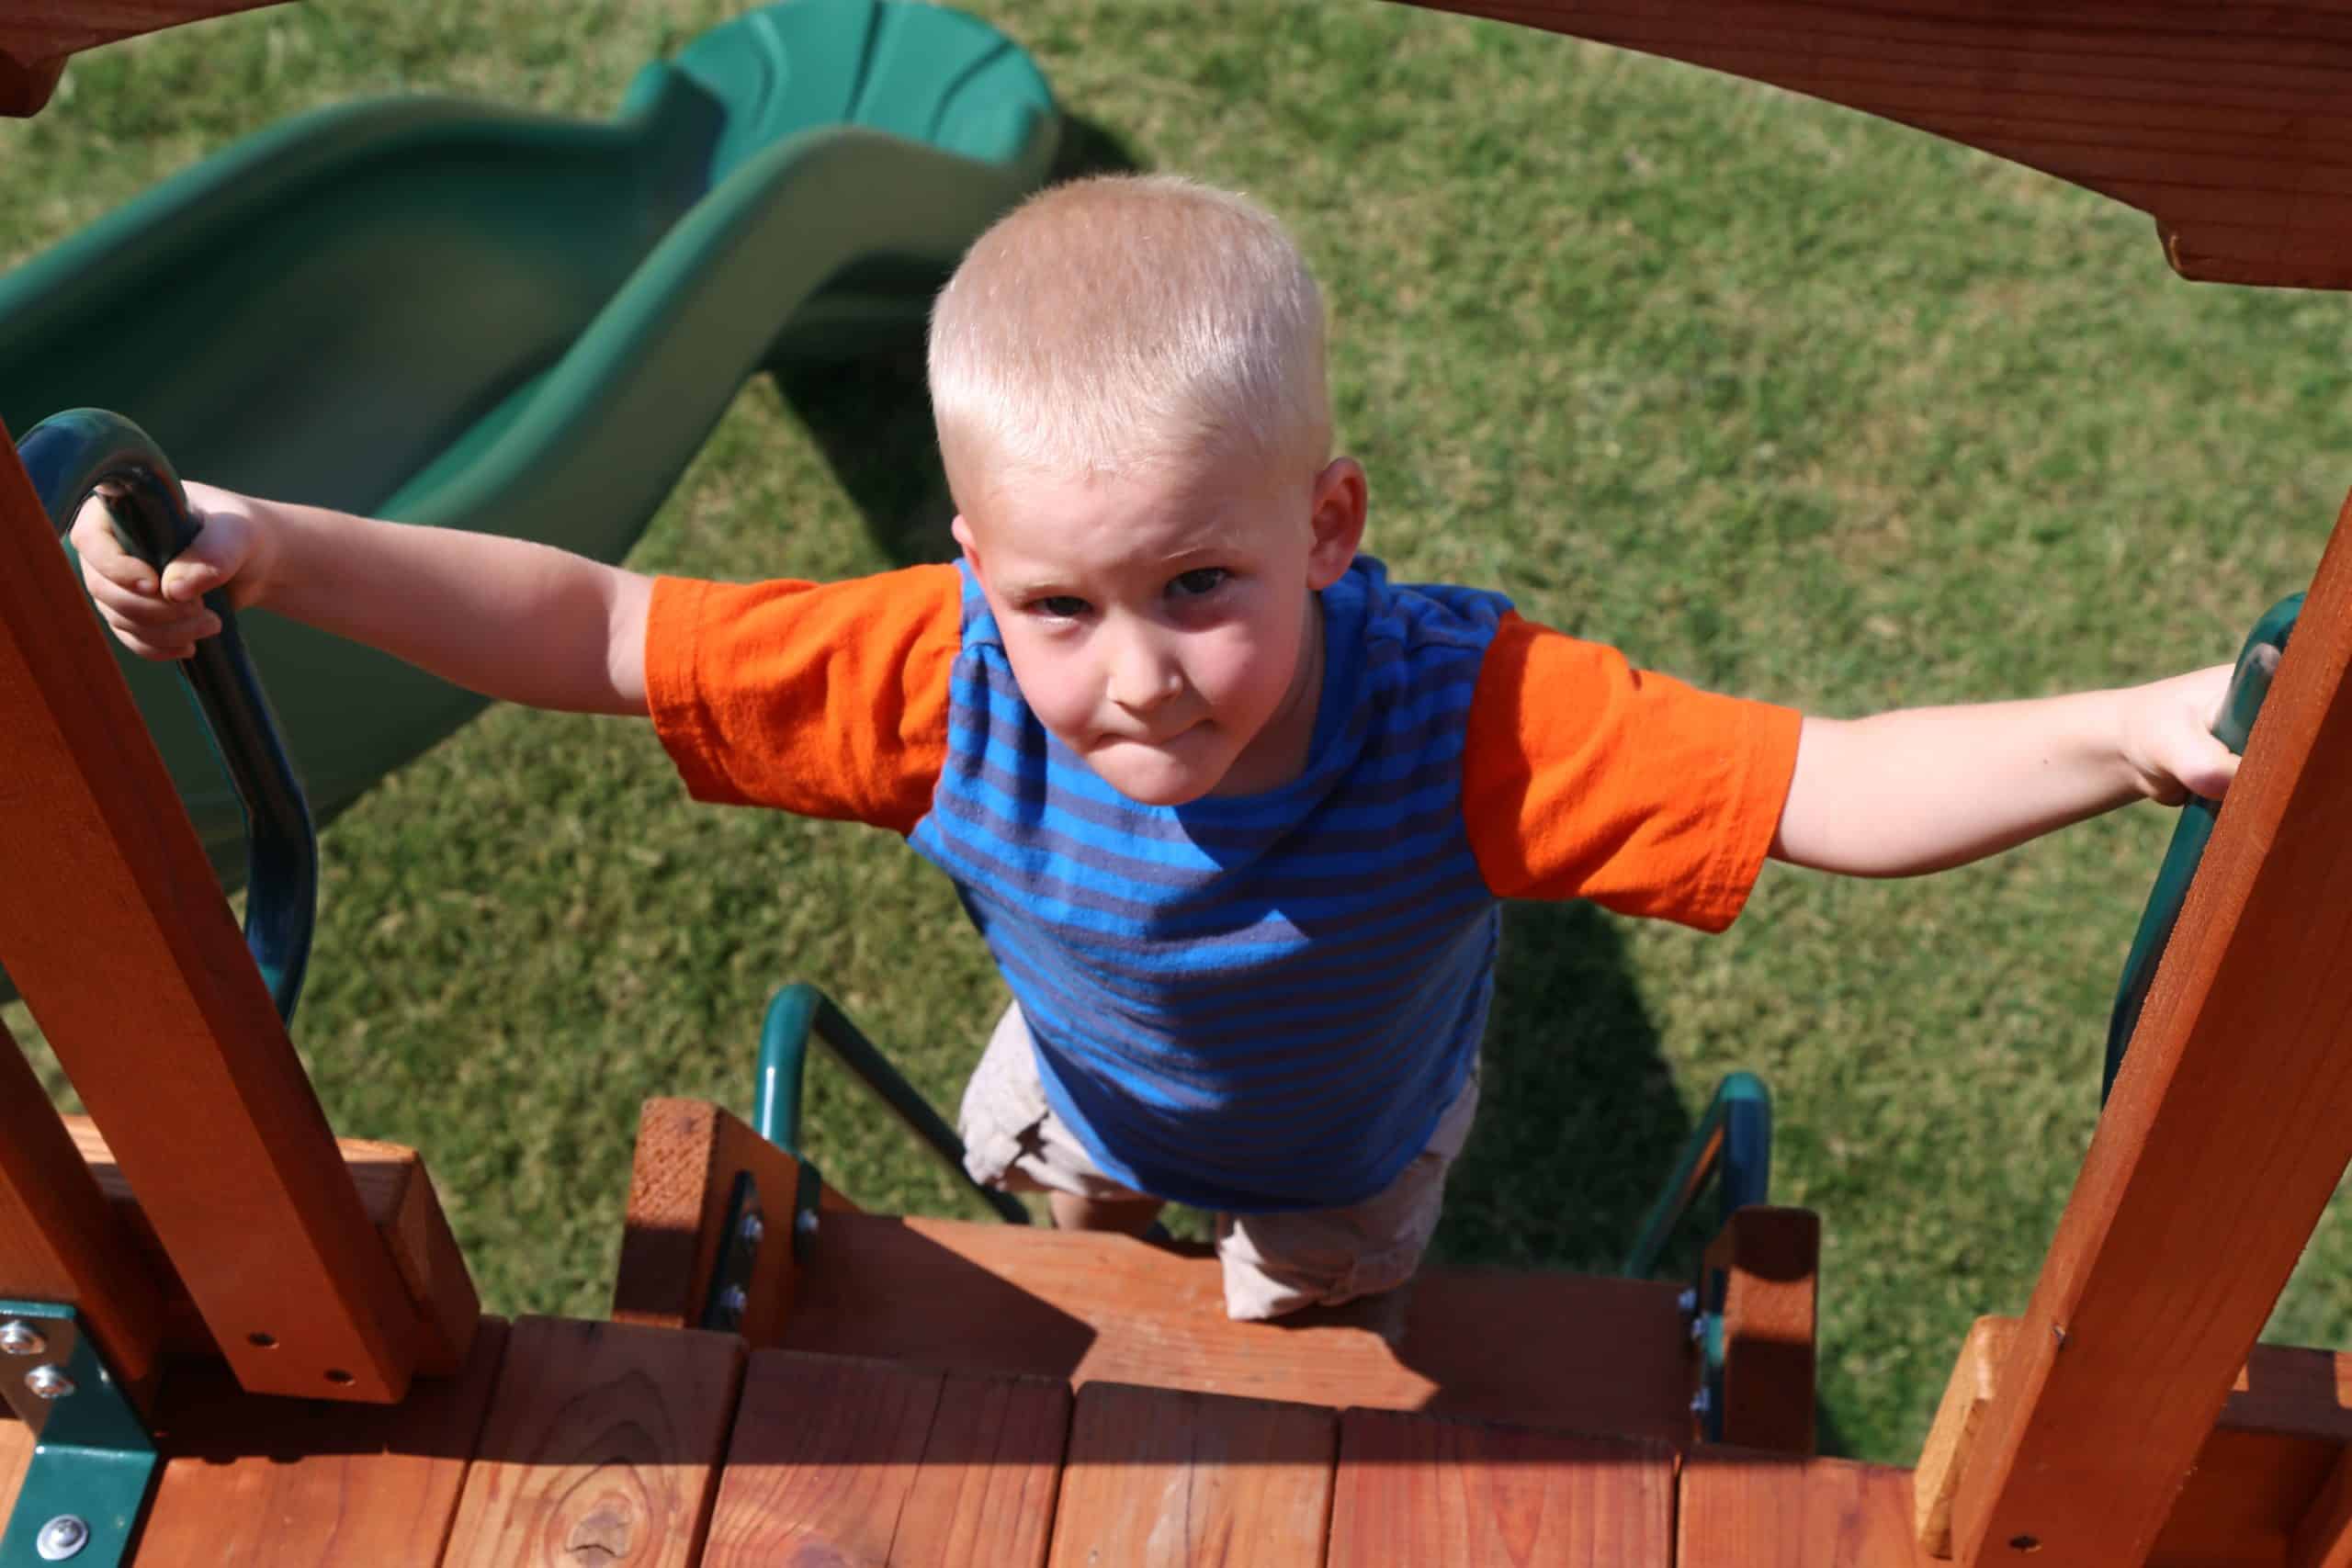 Swing Set Keller, Texas, young boy climbing deck ladder on backyard playset